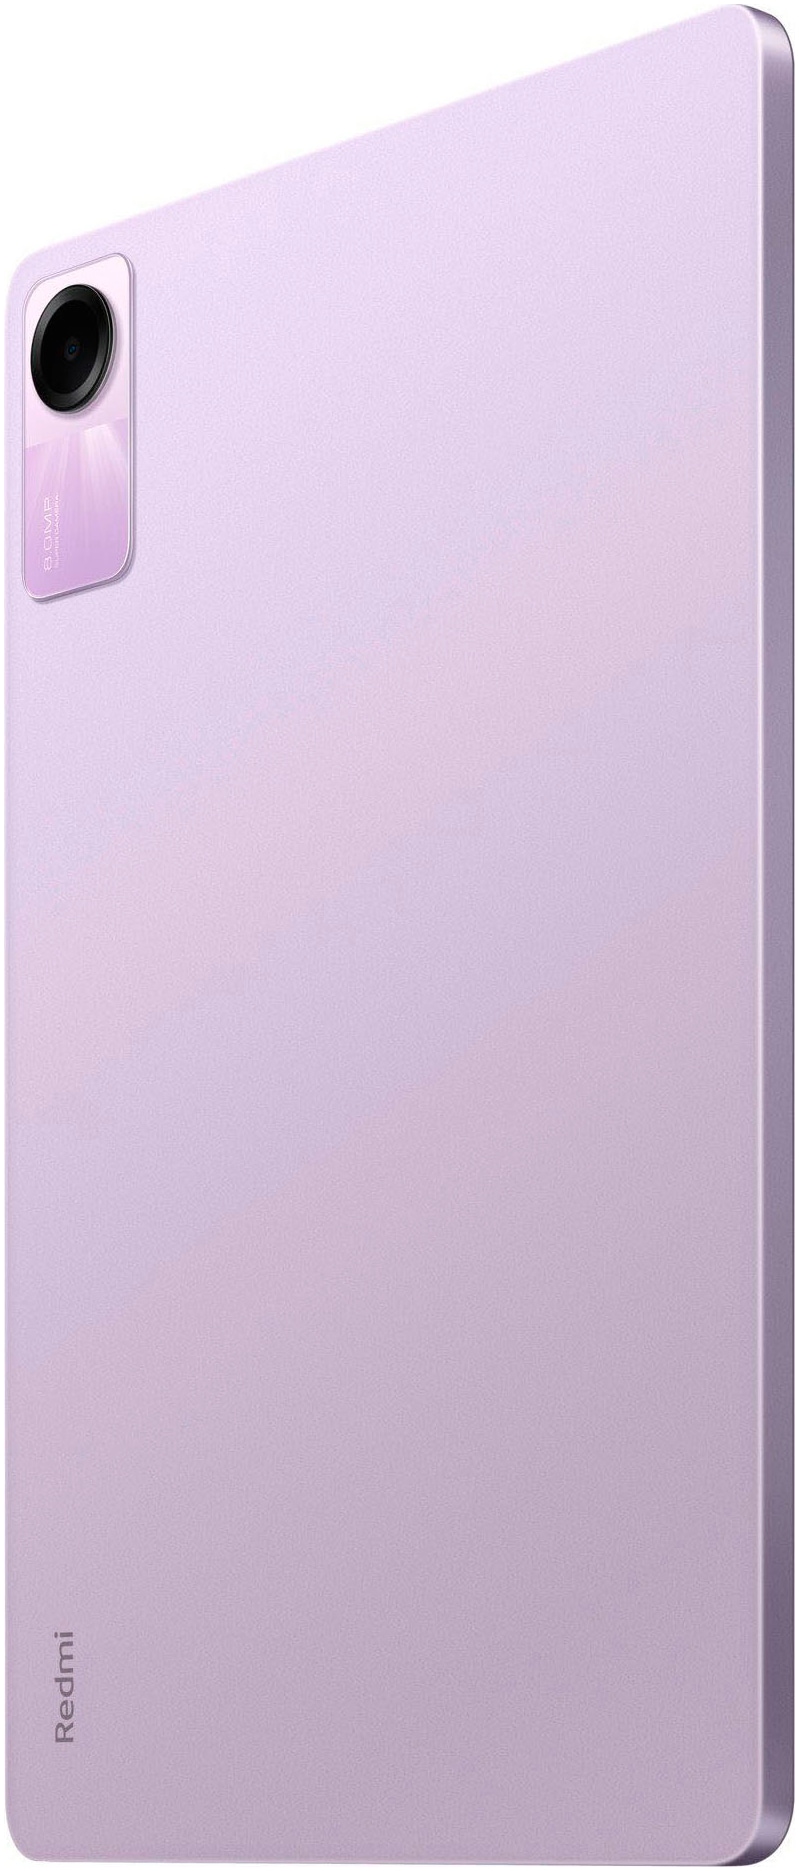 Xiaomi Tablet »Redmi Pad SE 128GB«, (Android)